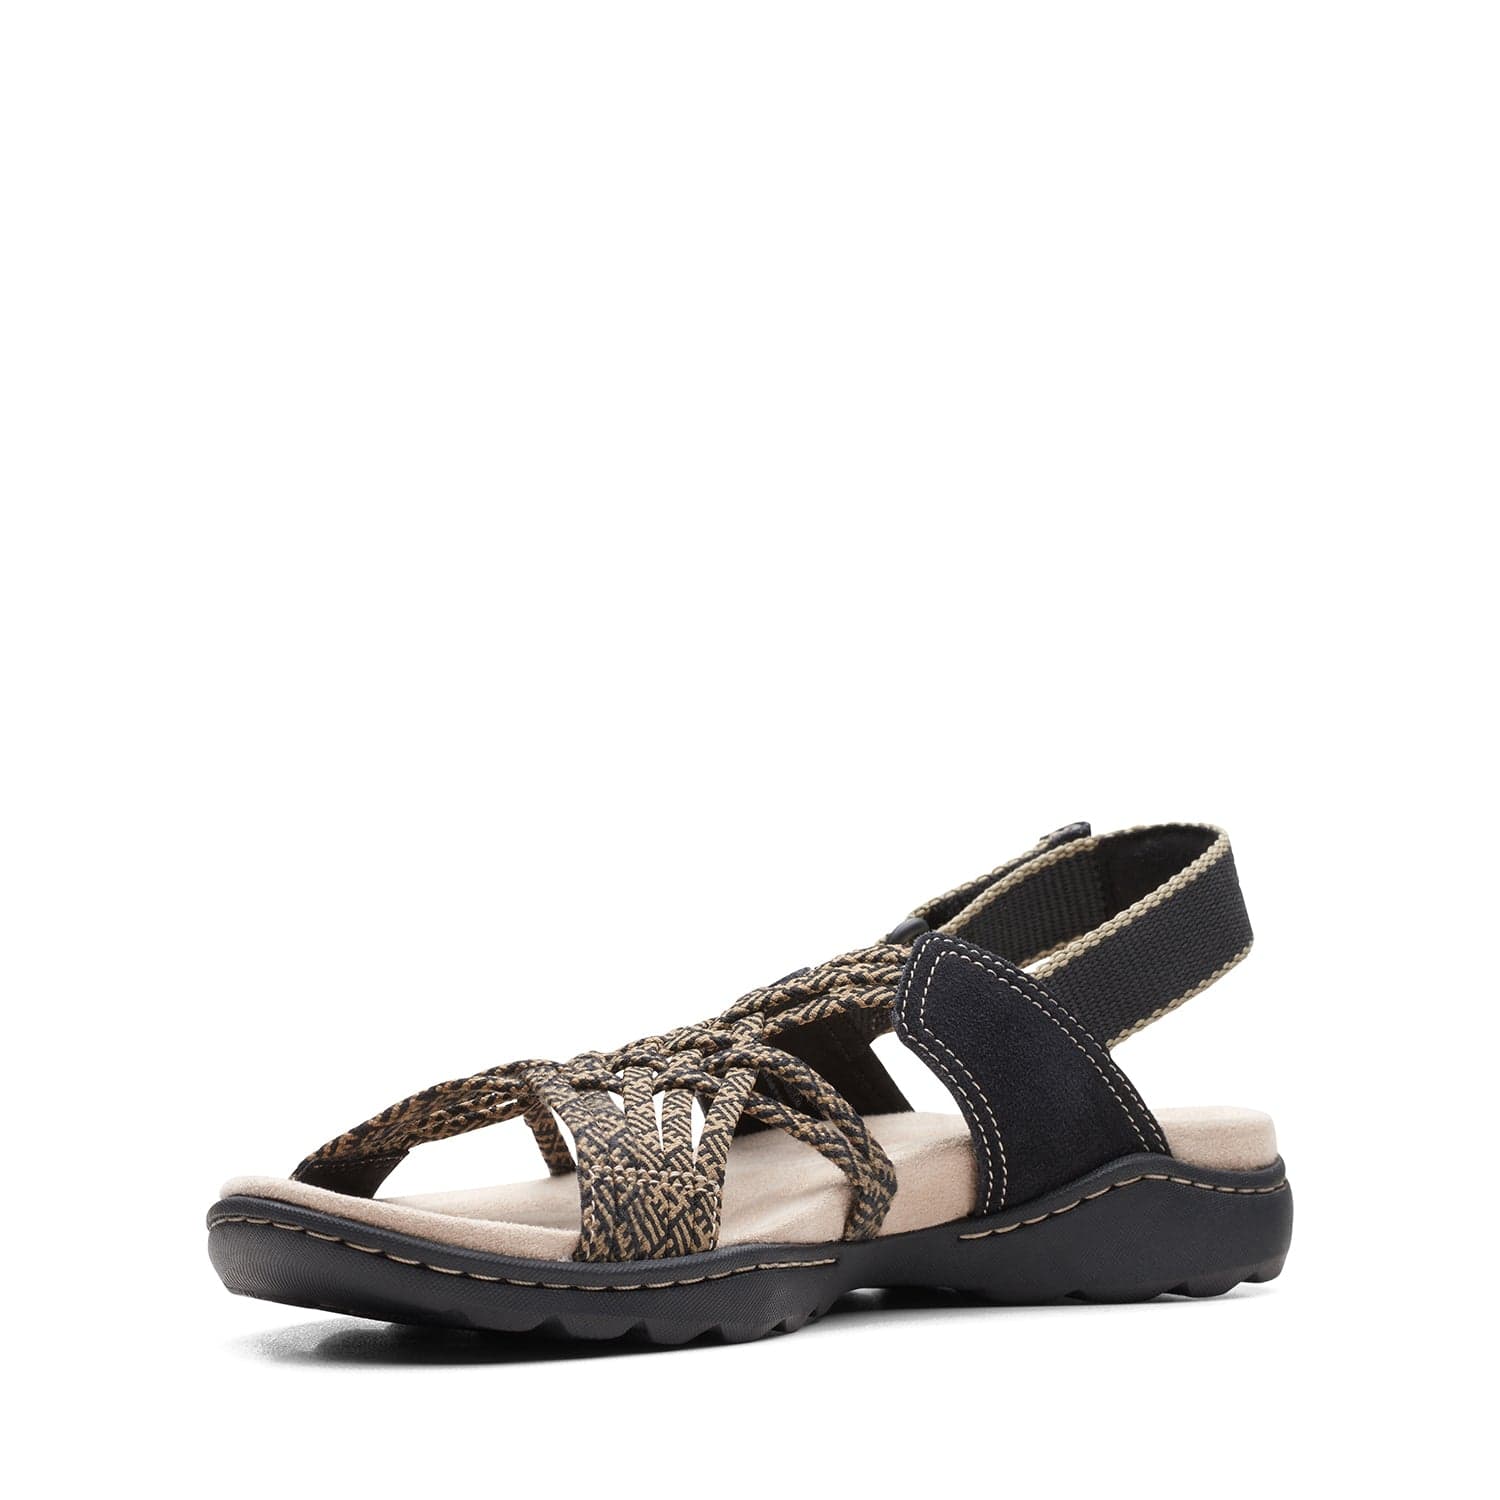 Clarks Amanda Ease Sandals - Black Combi - 261653744 - D Width (Standard Fit)